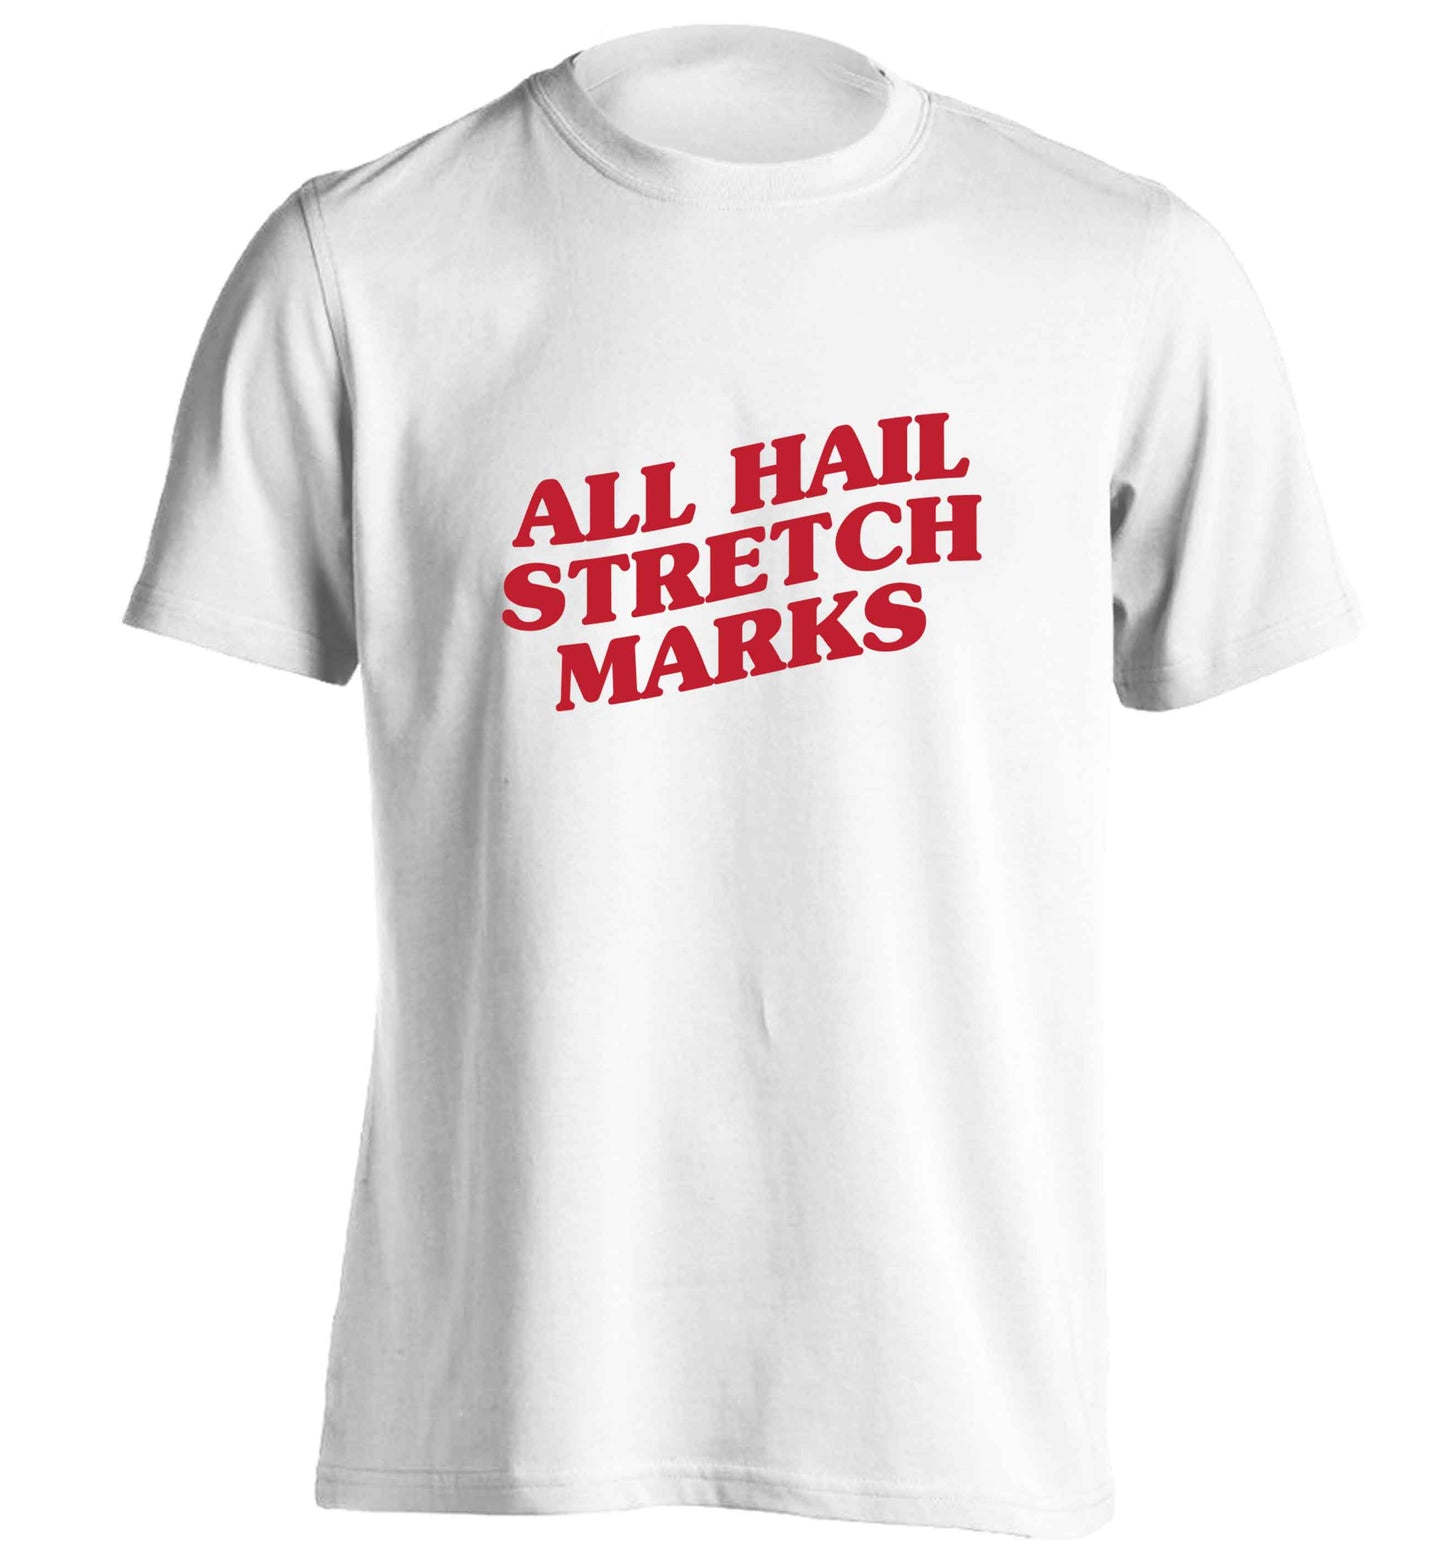 All hail stretch marks adults unisex white Tshirt 2XL